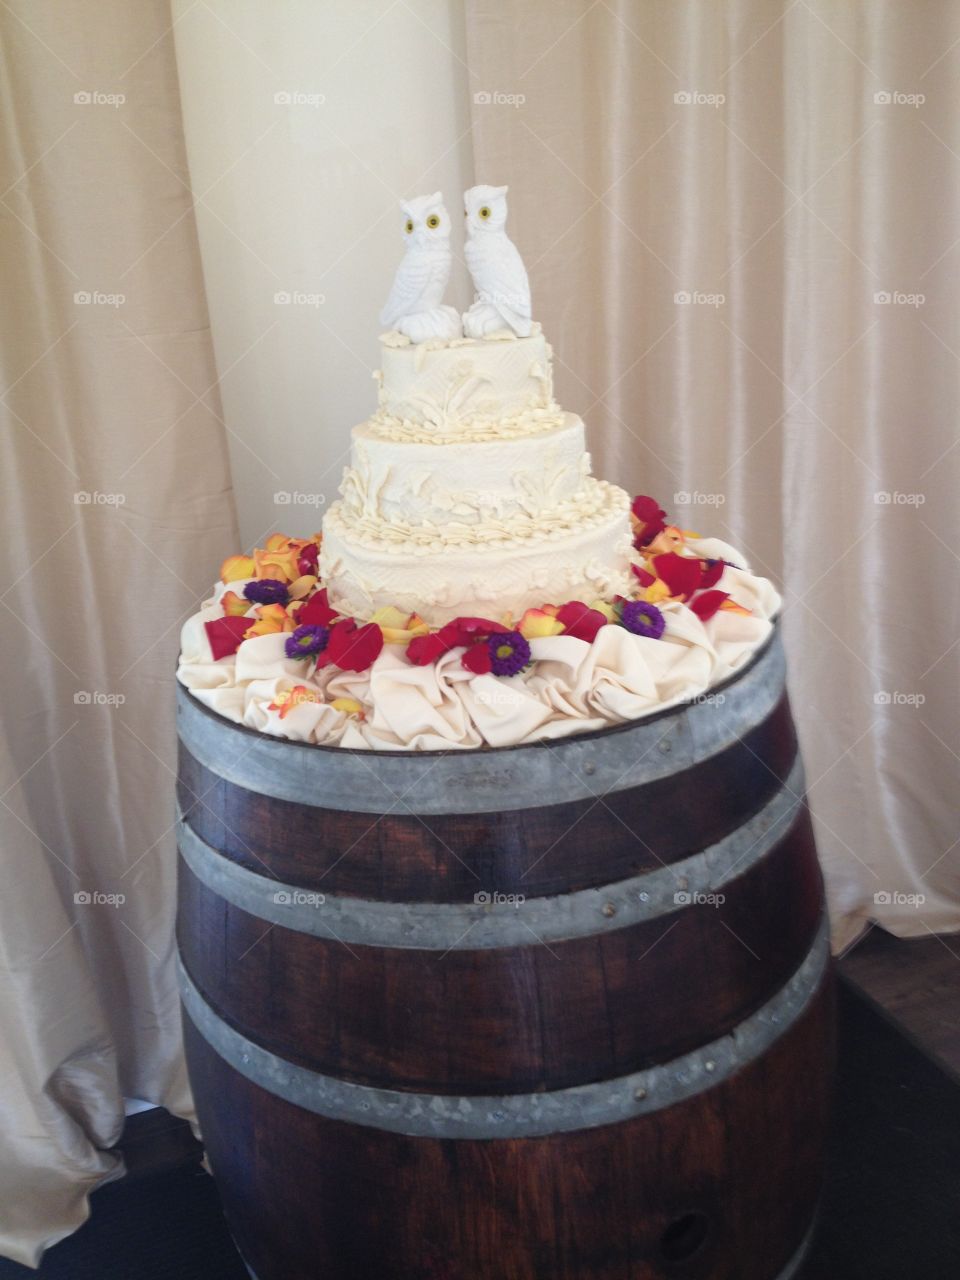 Owl wedding cake at winery
